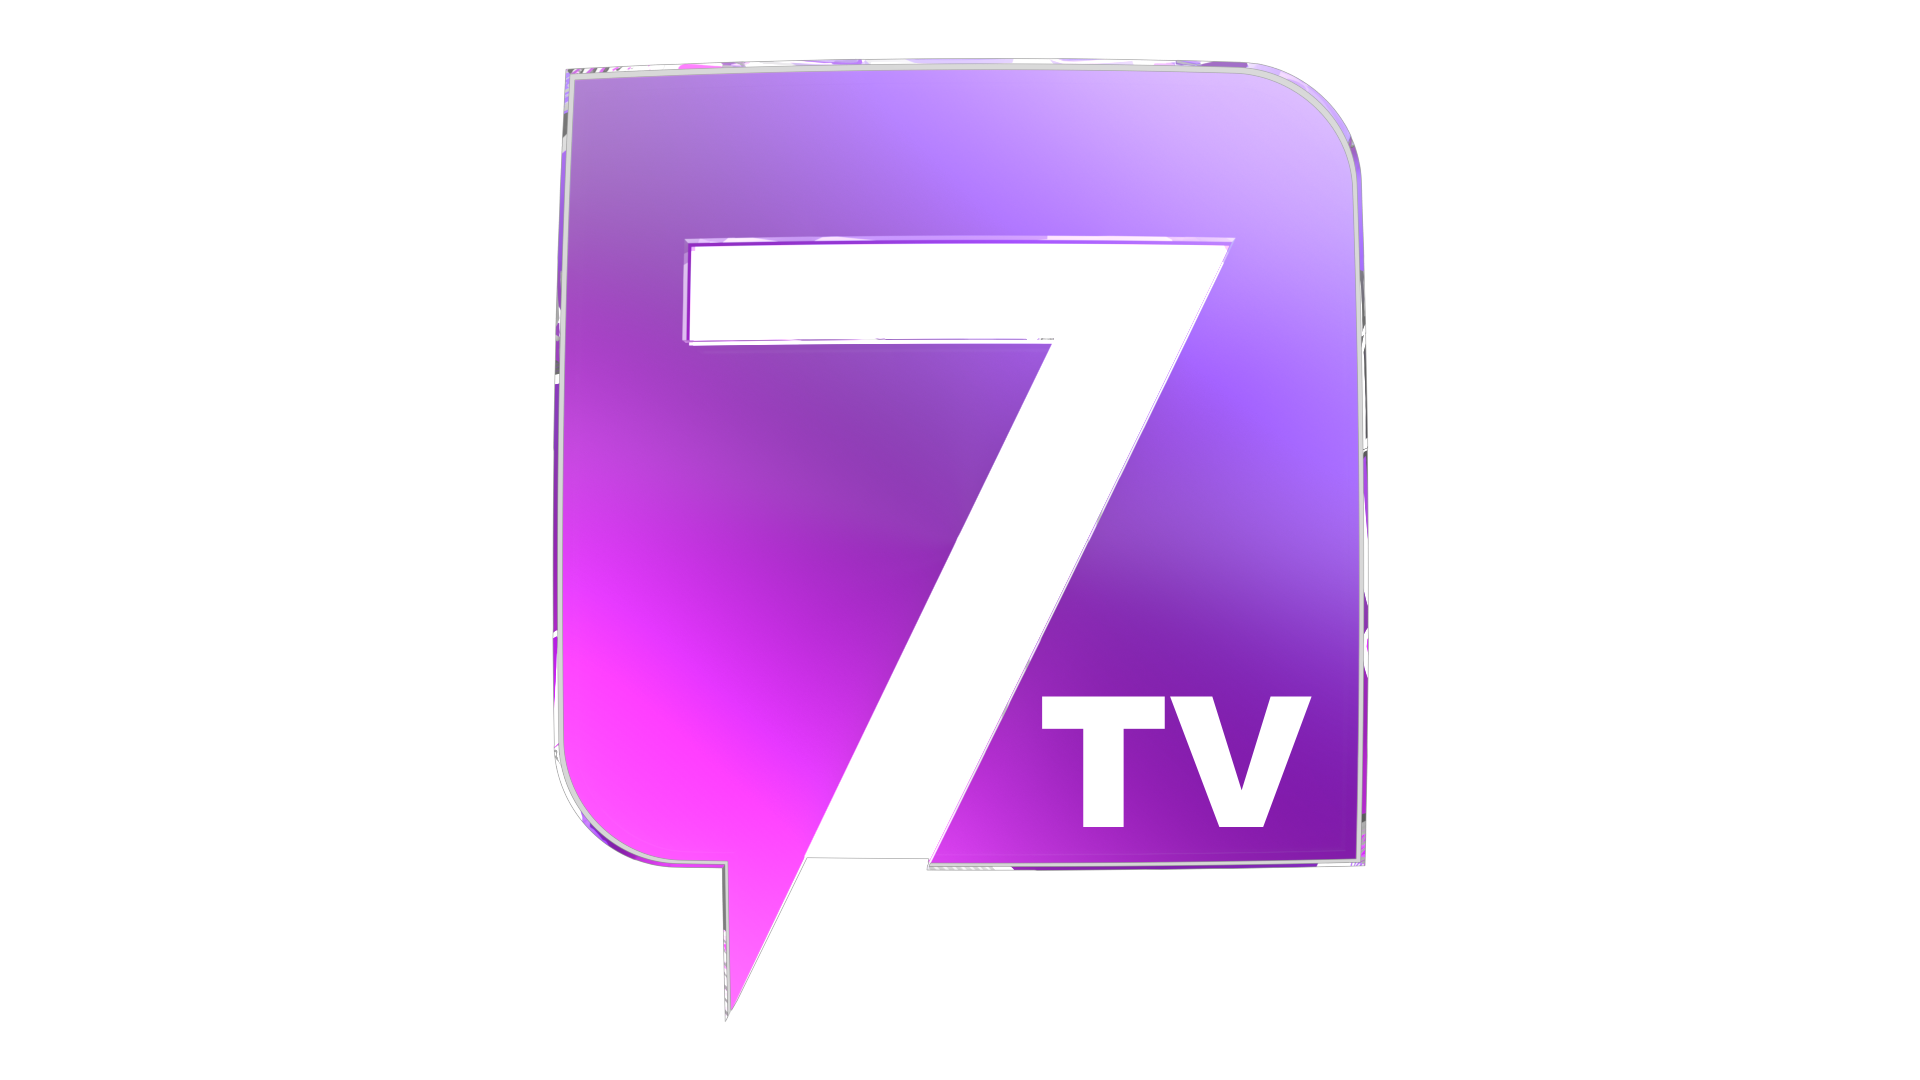 S 7 tv. Логотипы ТВ каналов. Логотип канала. 7 TV логотип. 7тв.